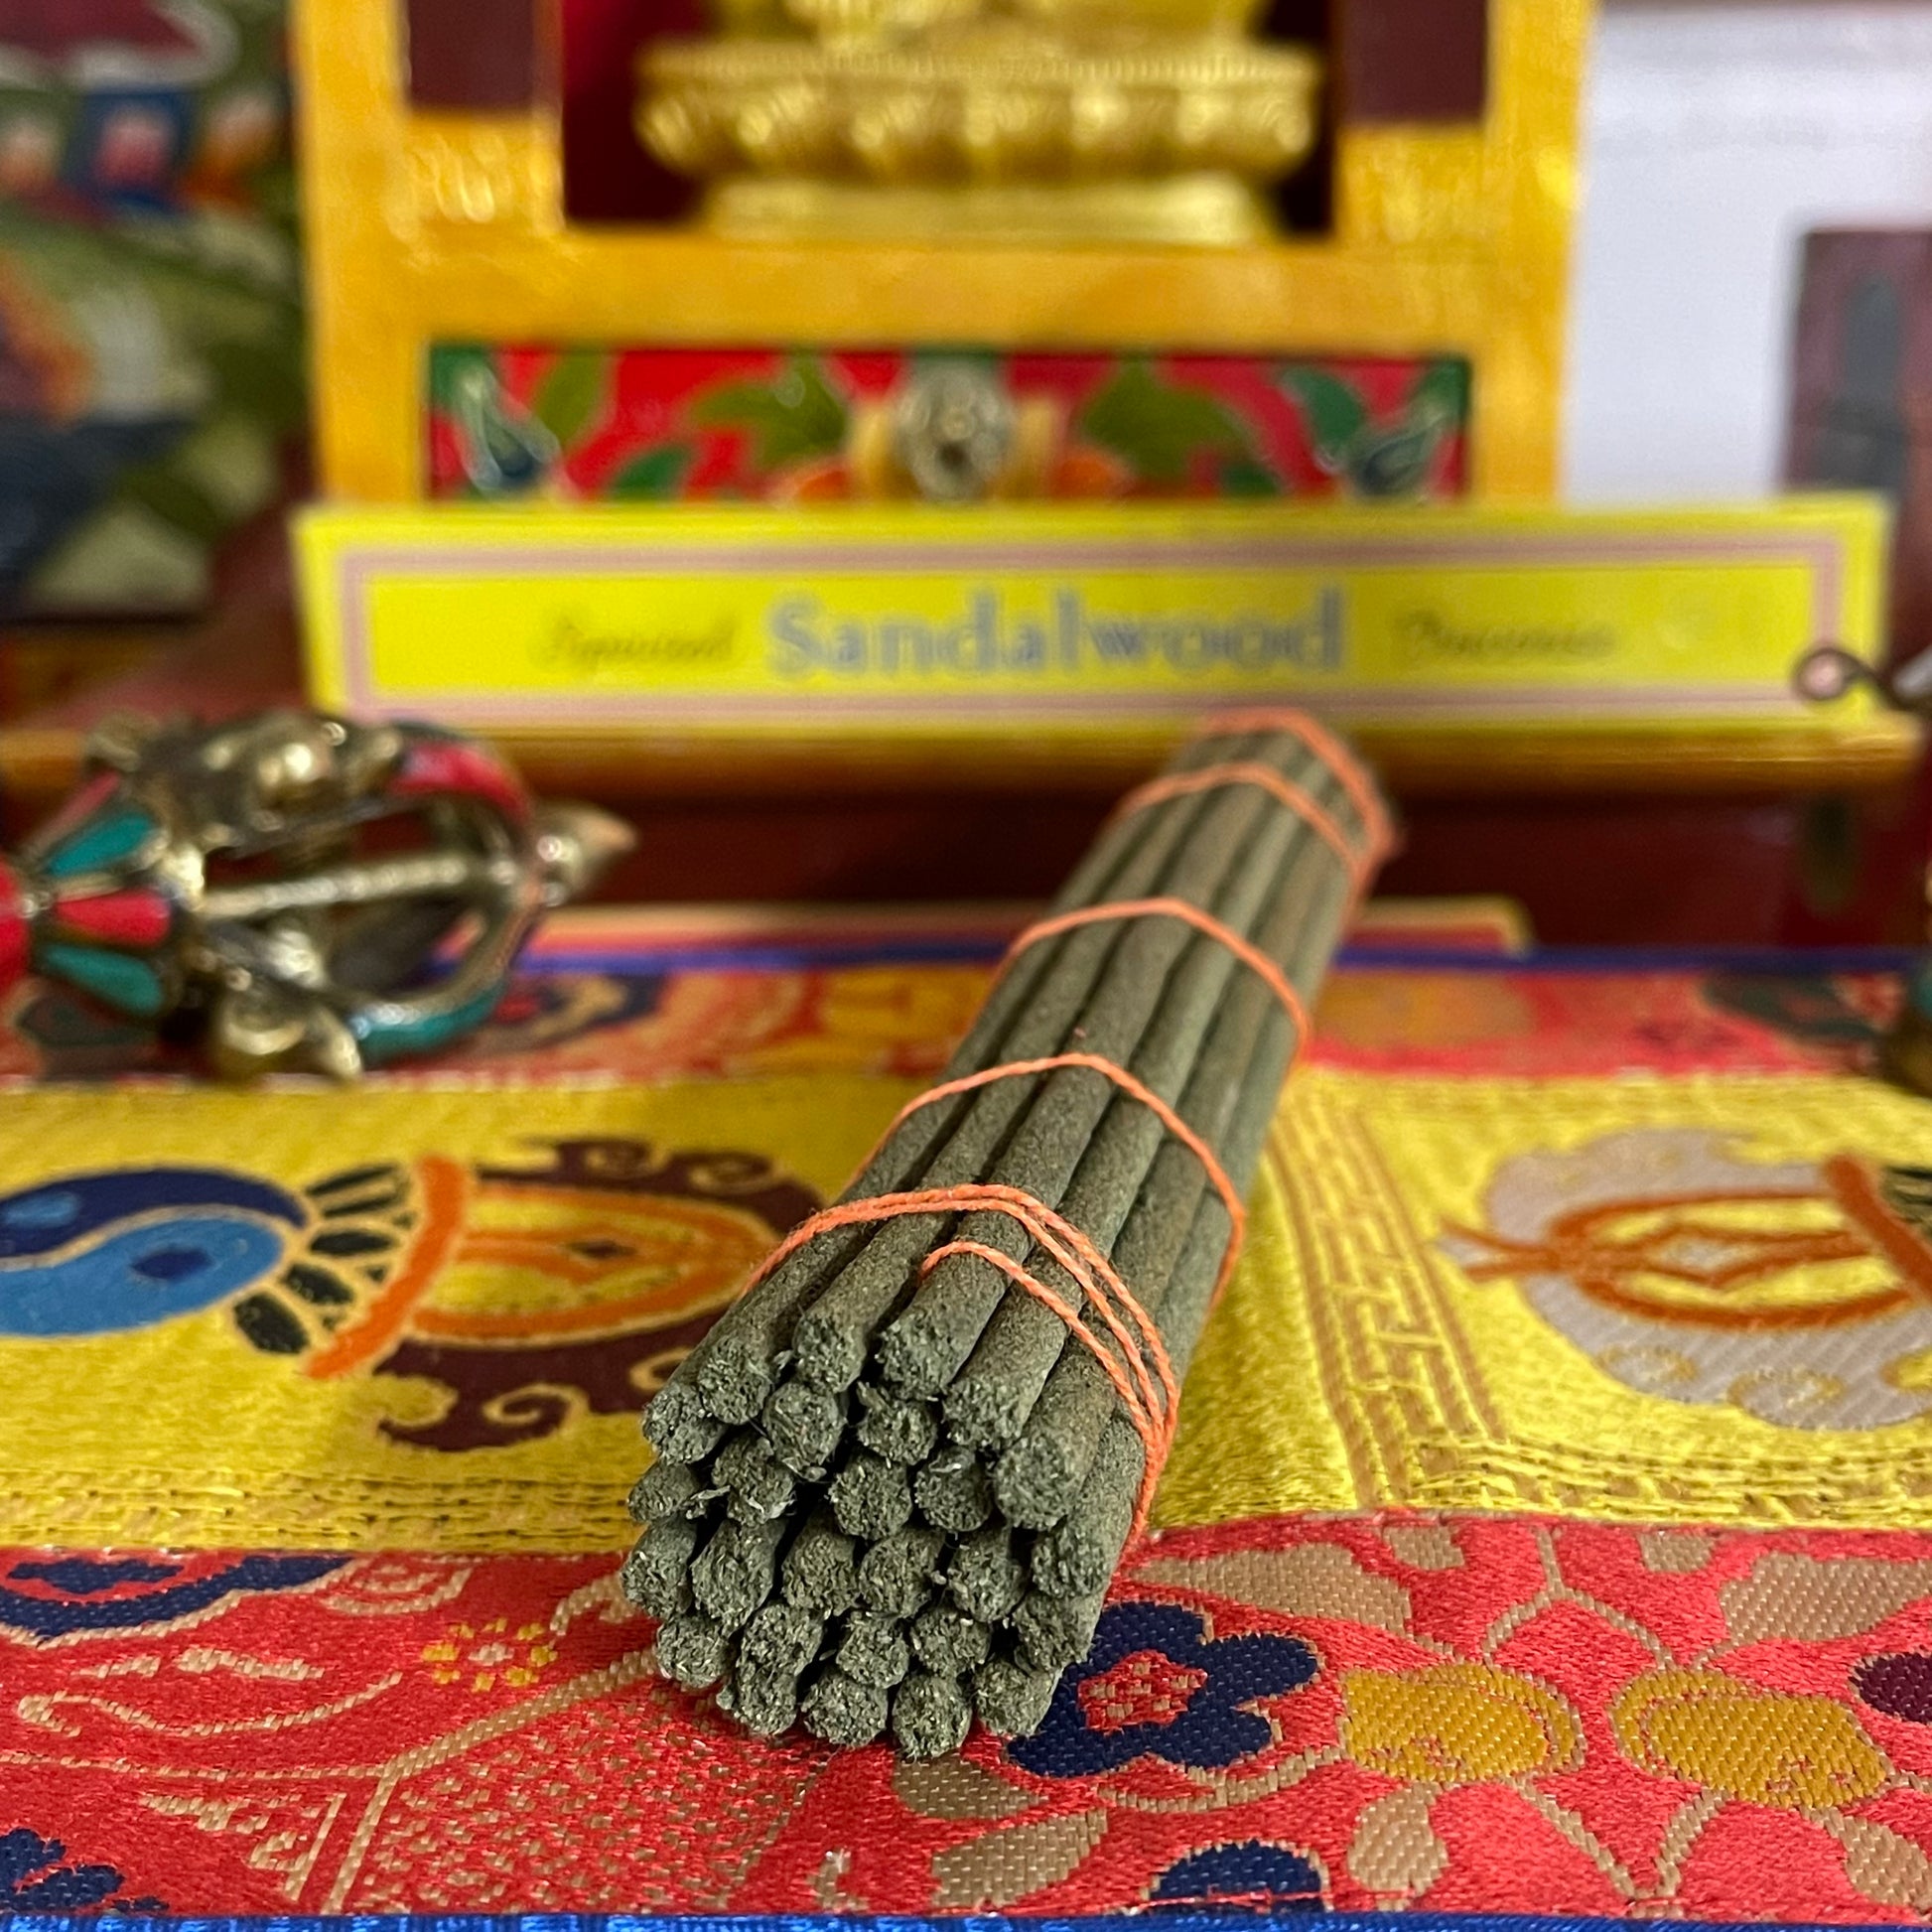 Chandra Devi Special Sandalwood Incense